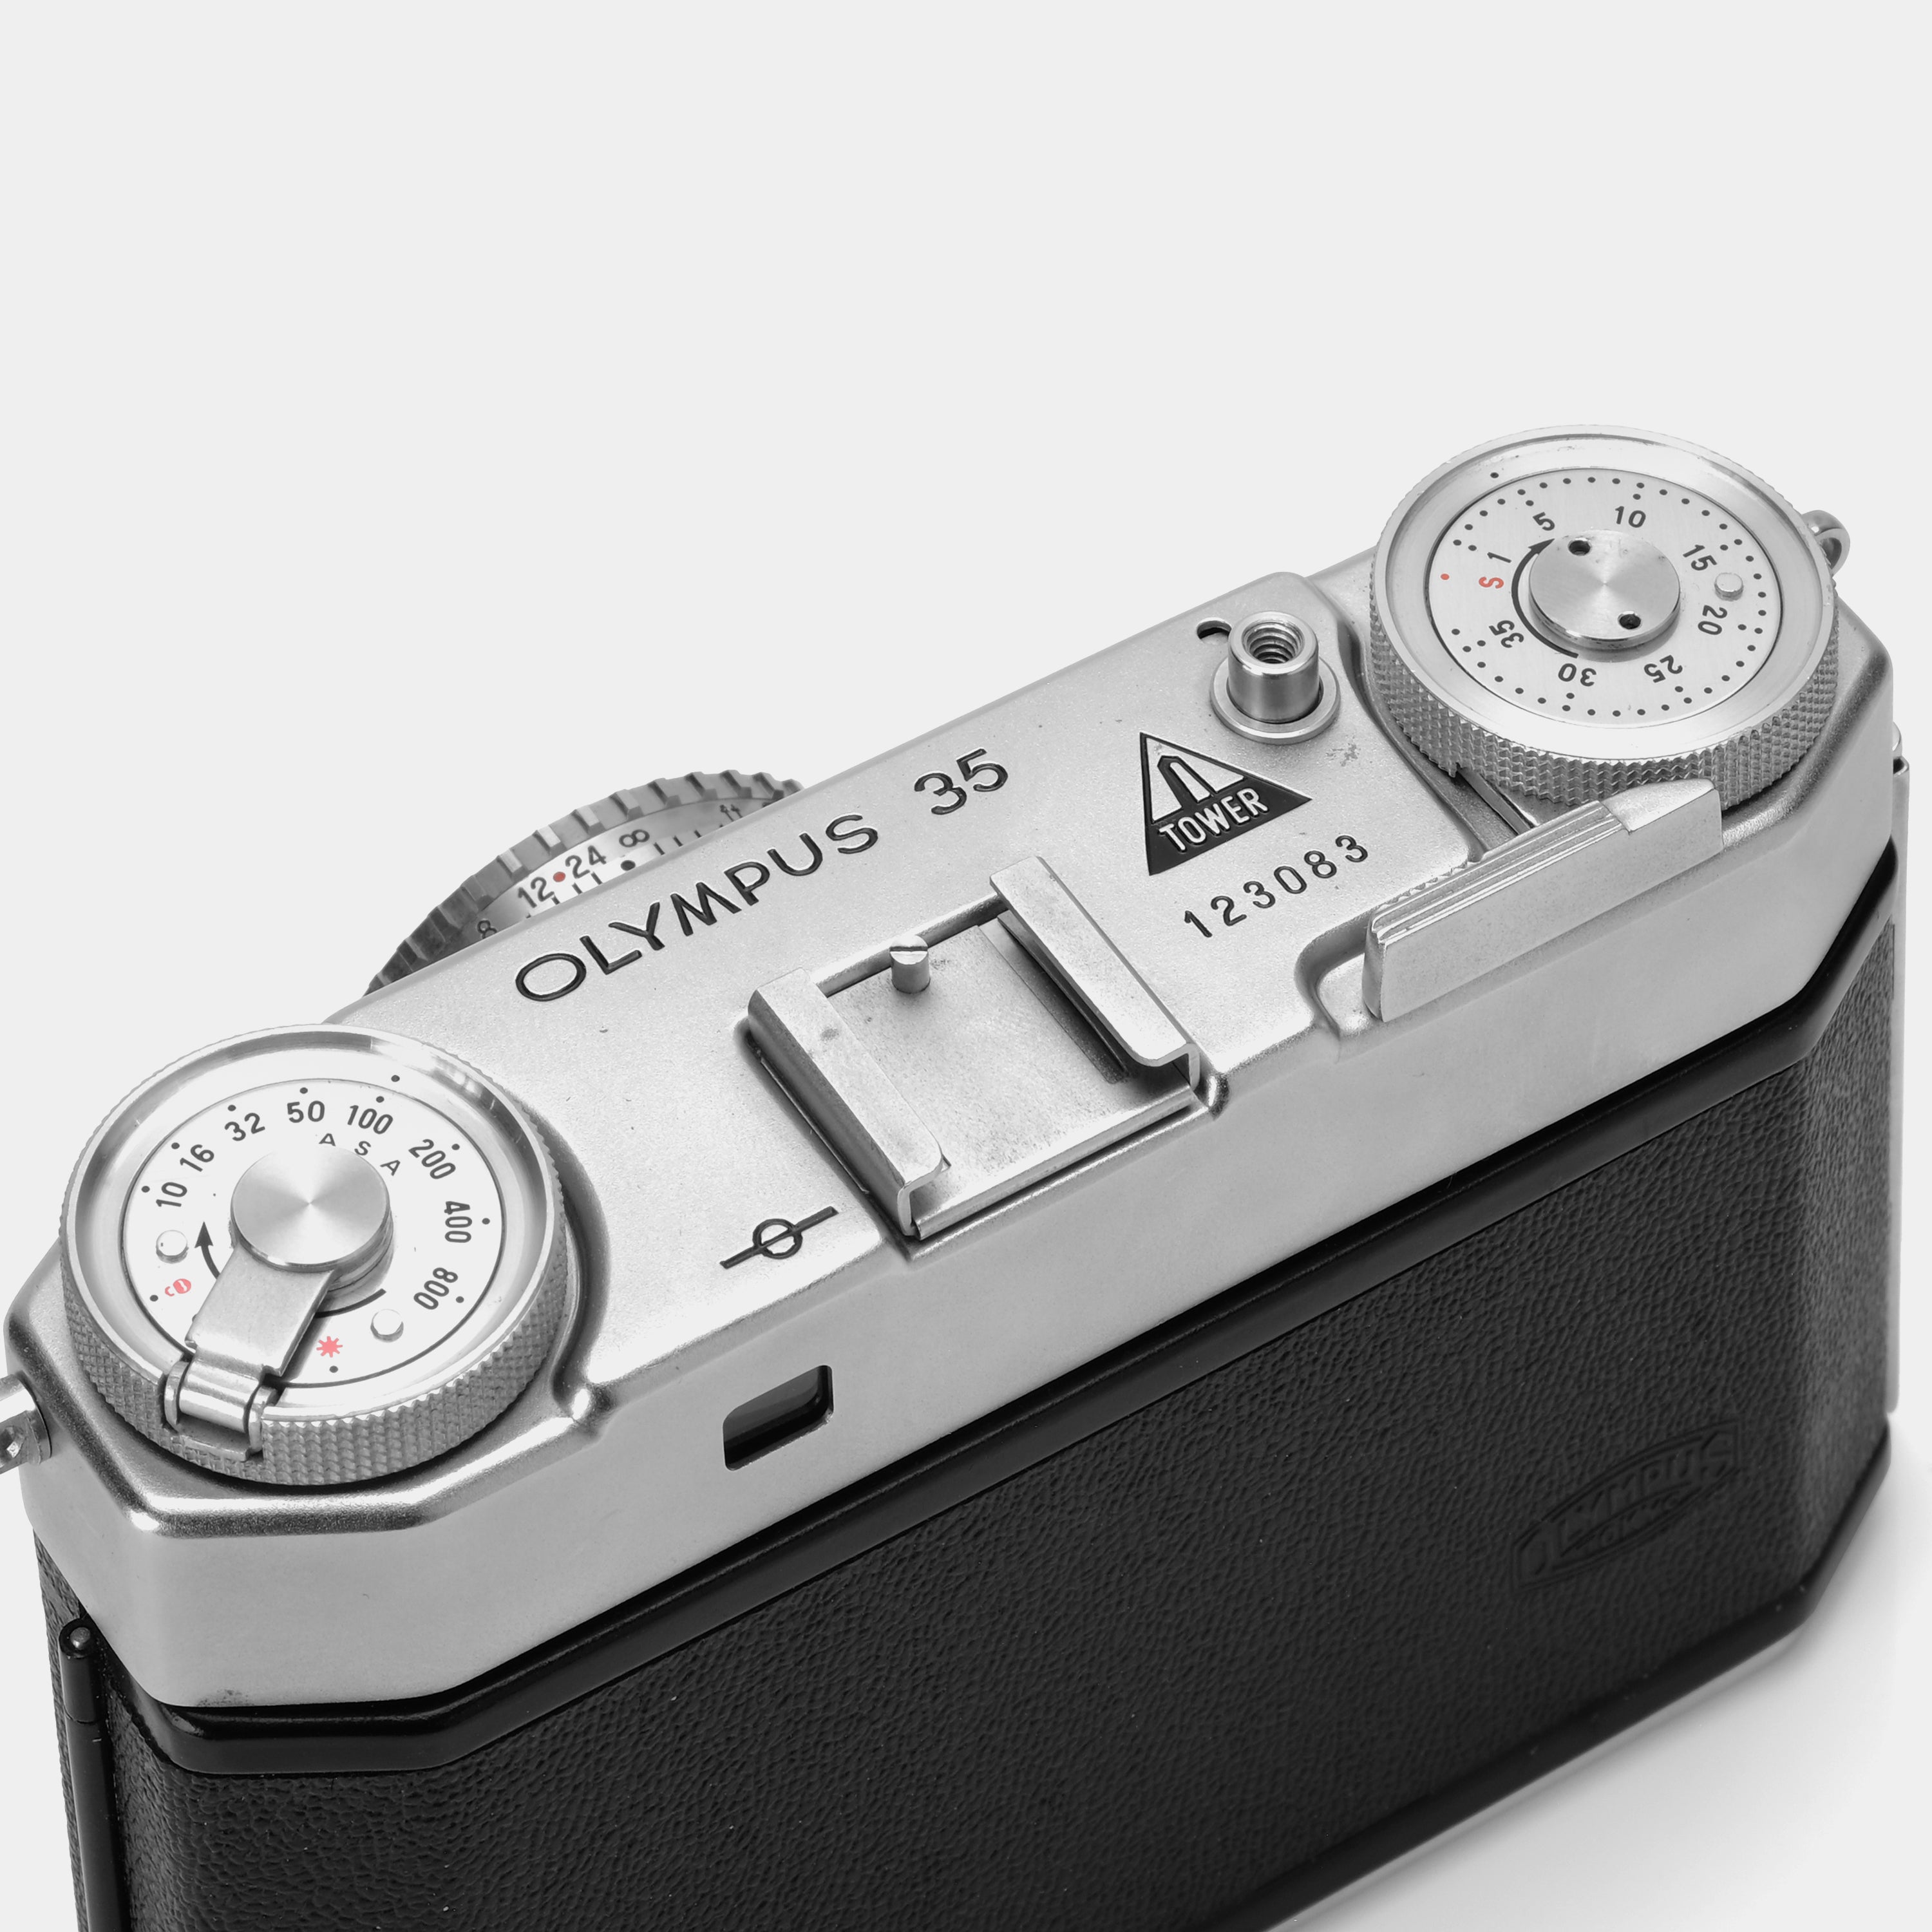 Olympus 35 35mm Rangefinder Film Camera